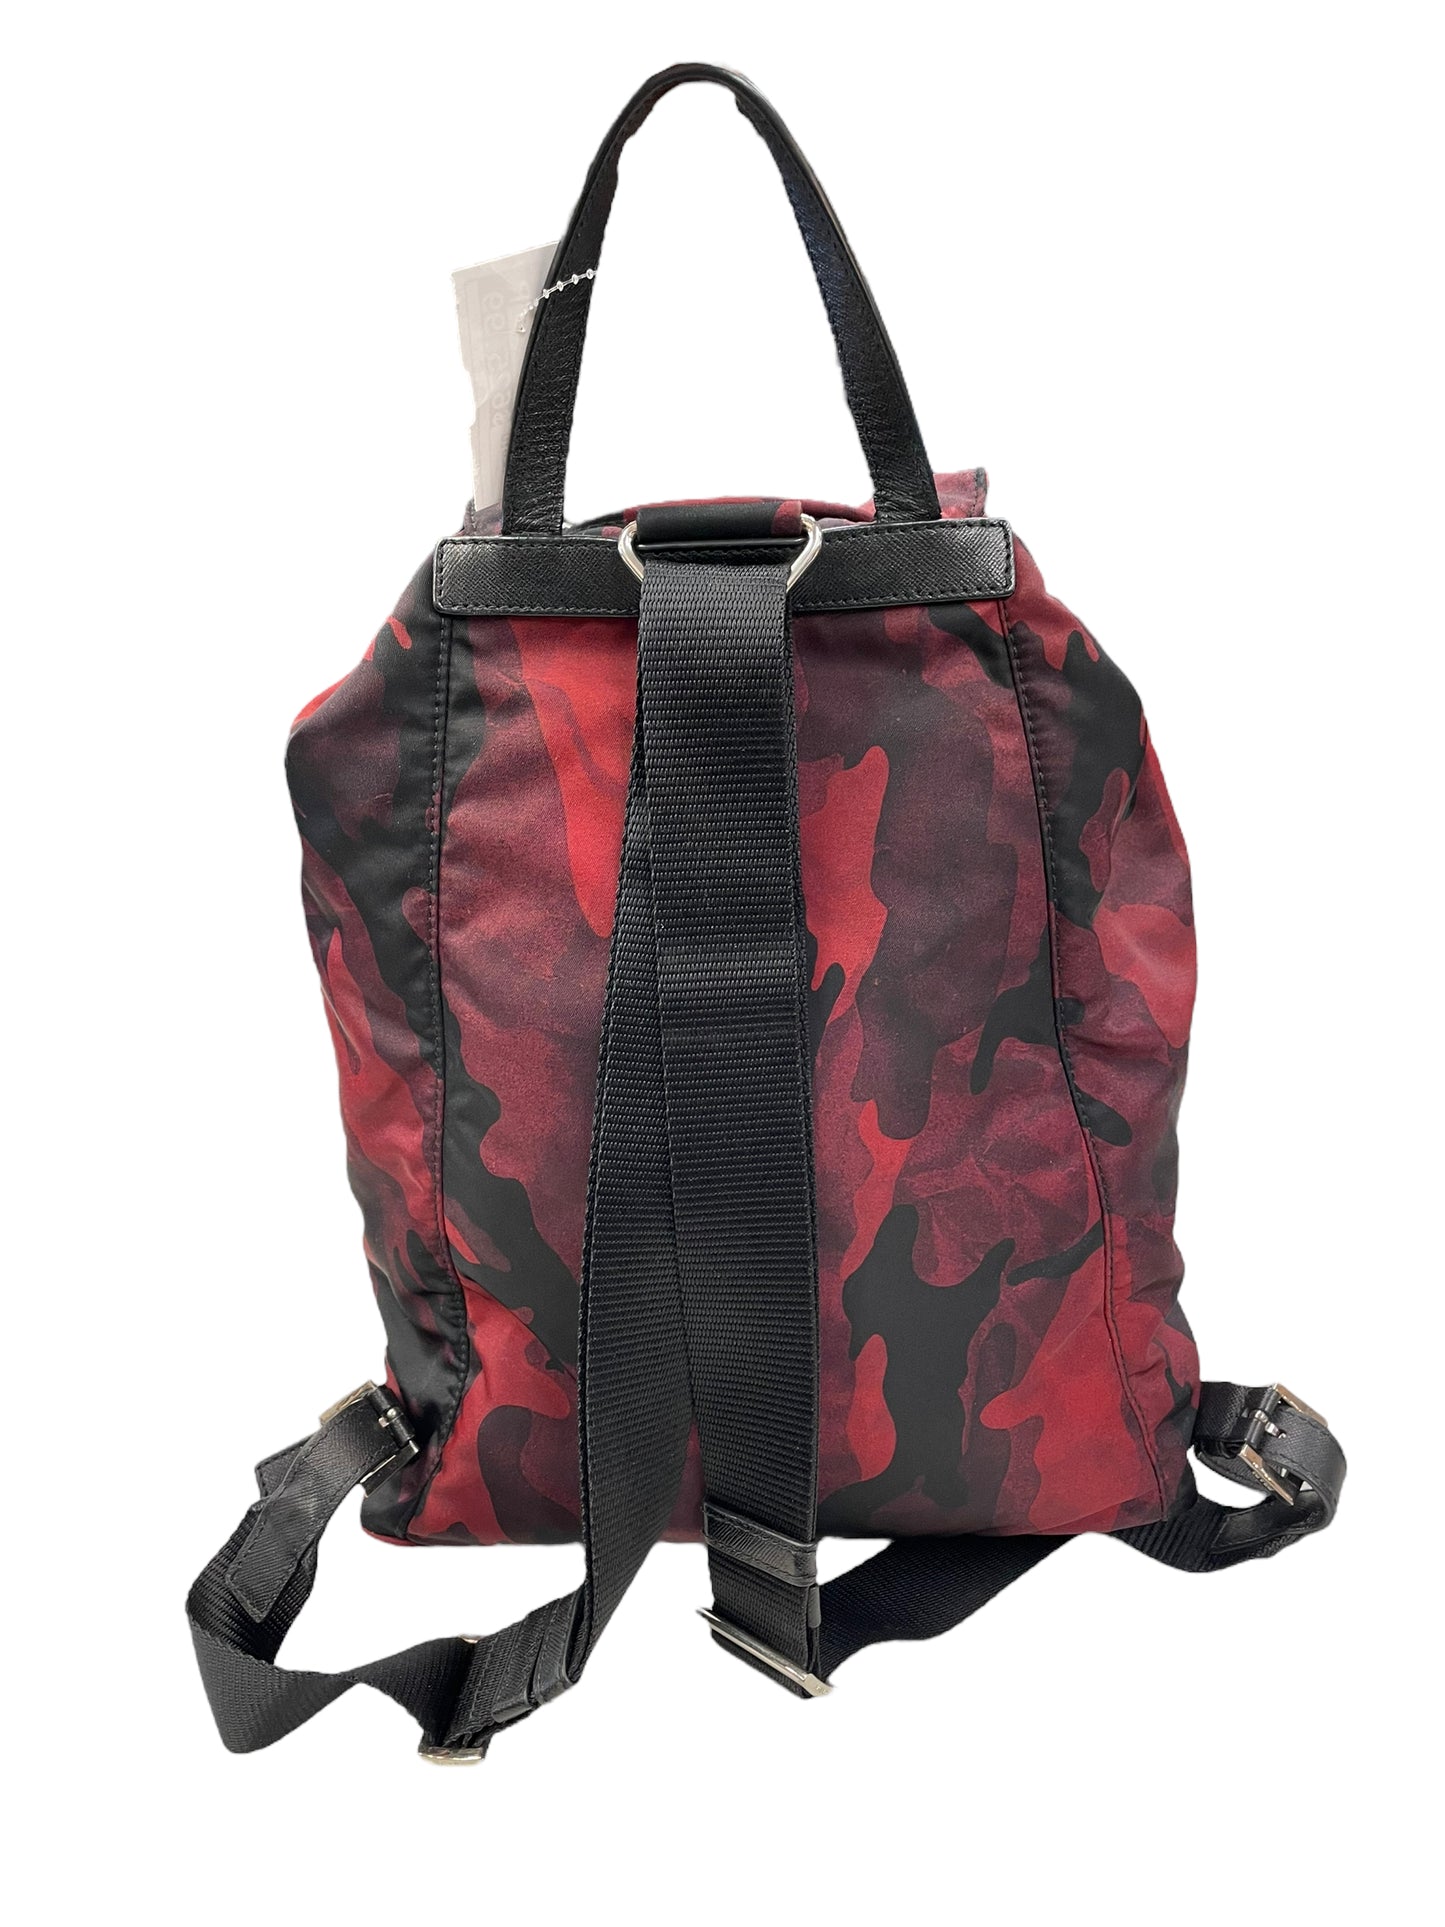 Backpack Designer By Prada  Size: Medium